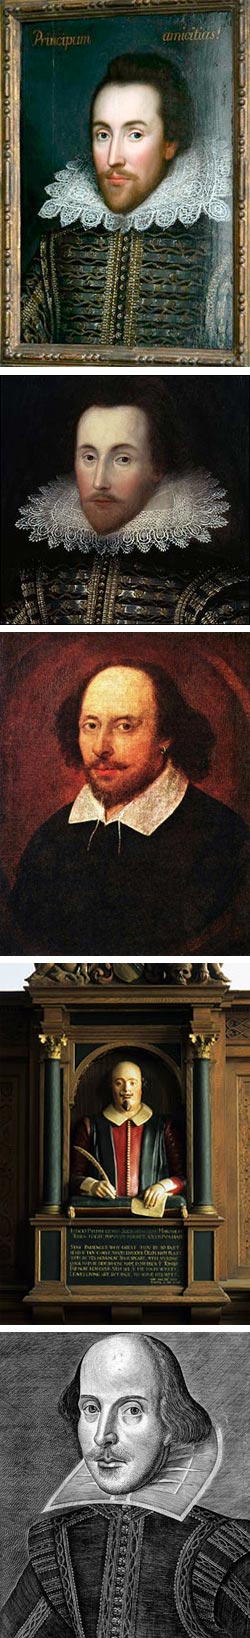 Shakespeare's Portrait?